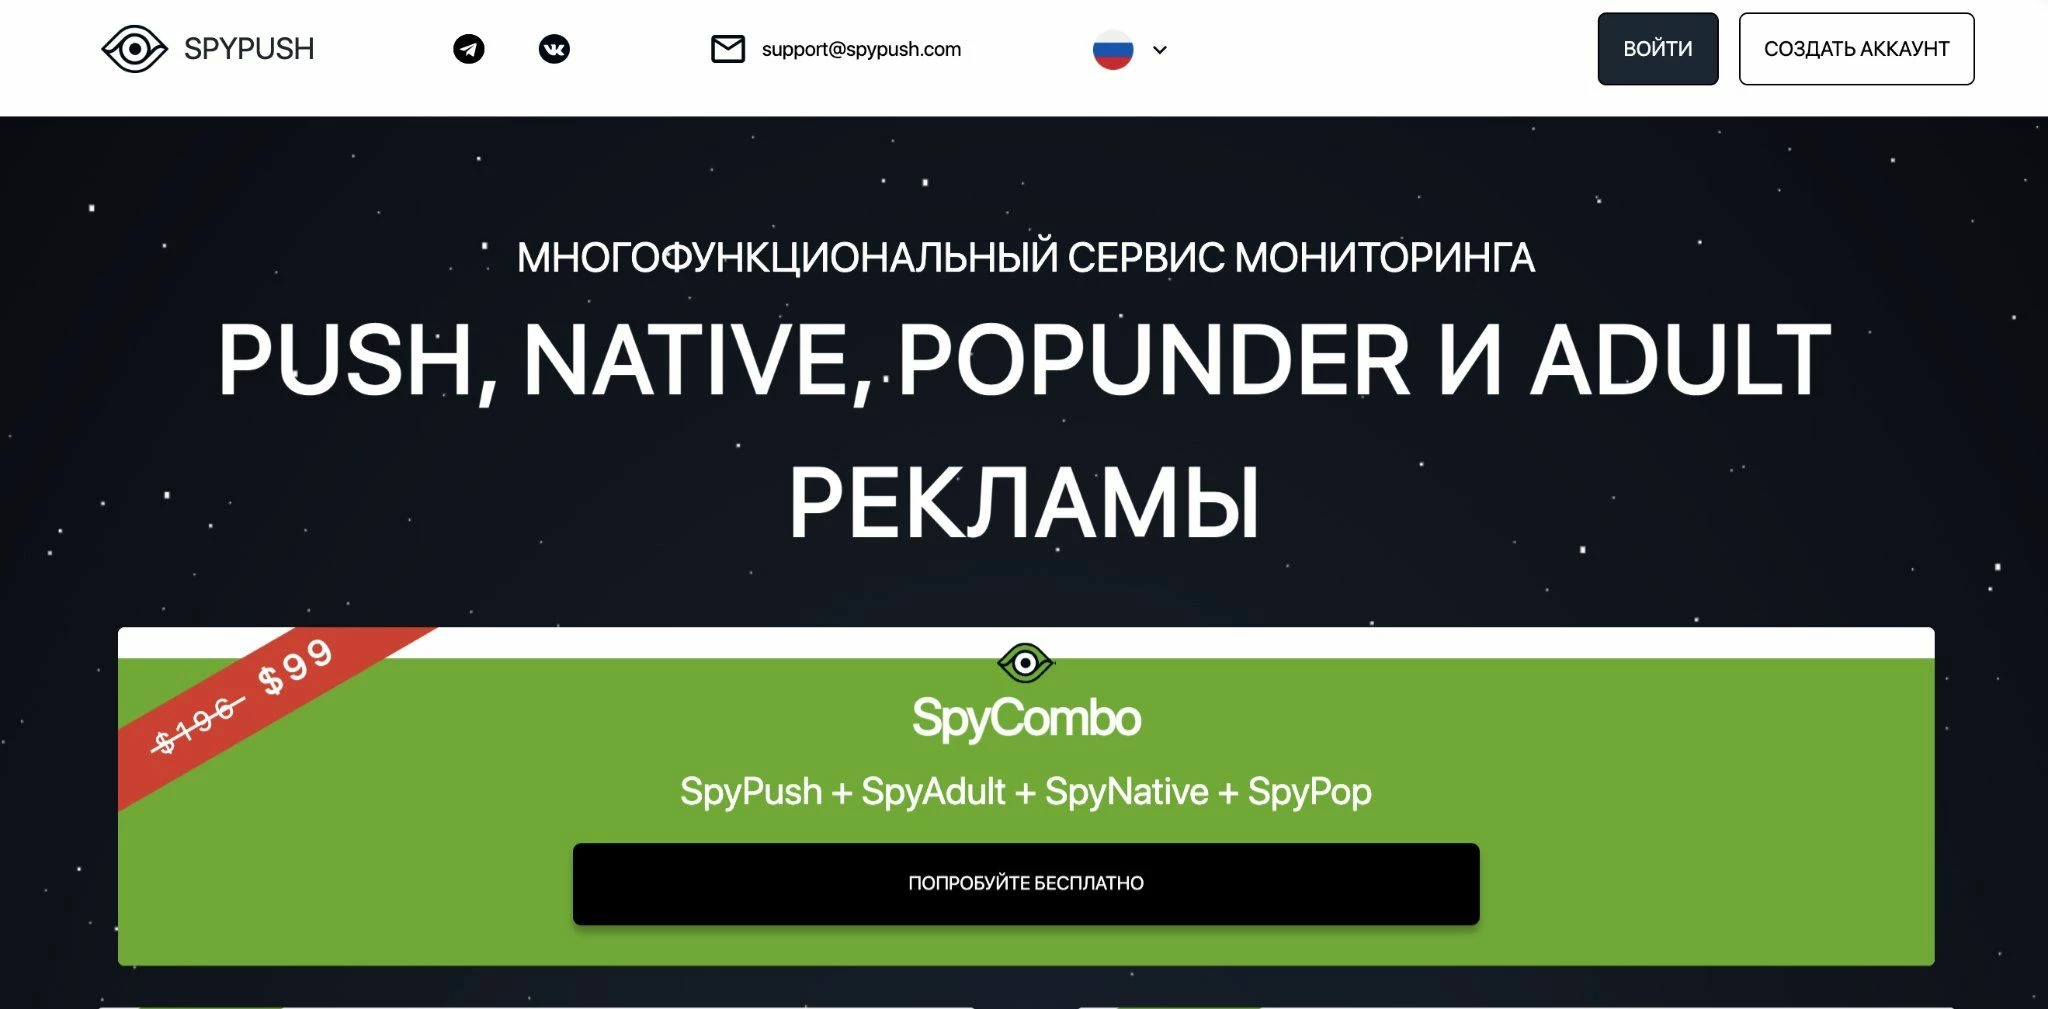 Спай SpyPush